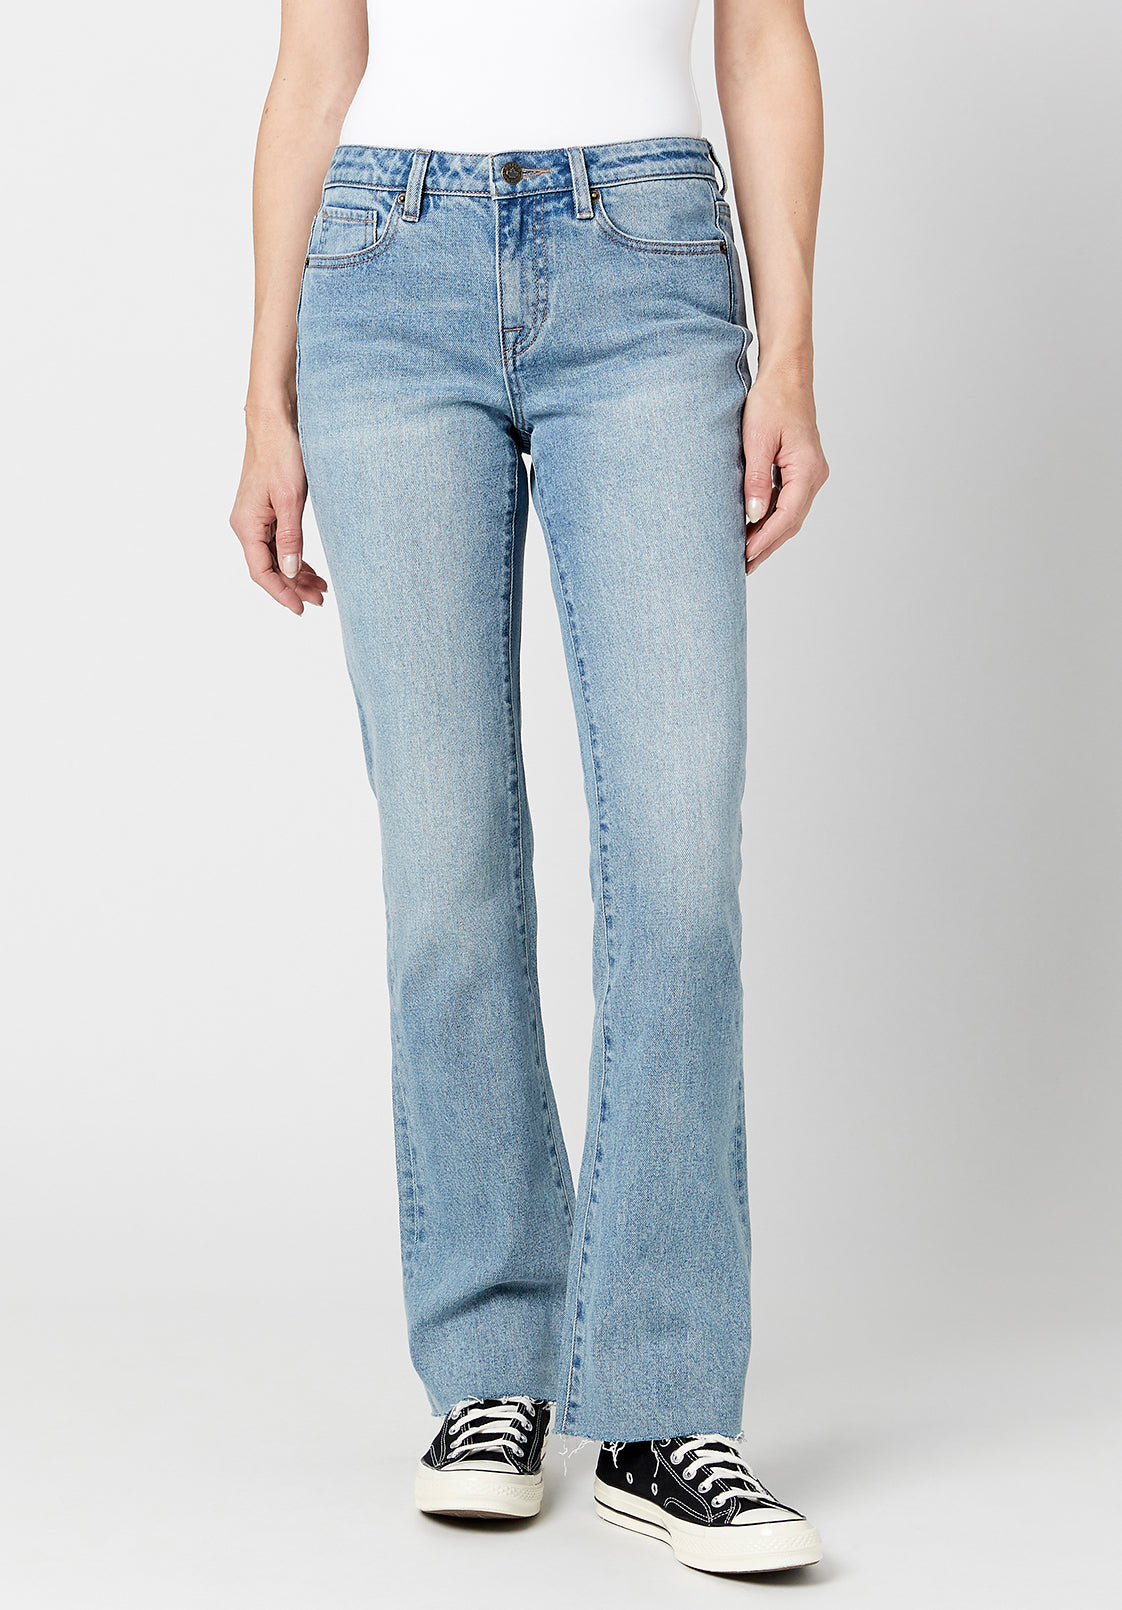 Earl Jeans, Jeans, Earl Jeans Womens Cross Detail On Pockets Size 26 By  Measurements Length 3 In